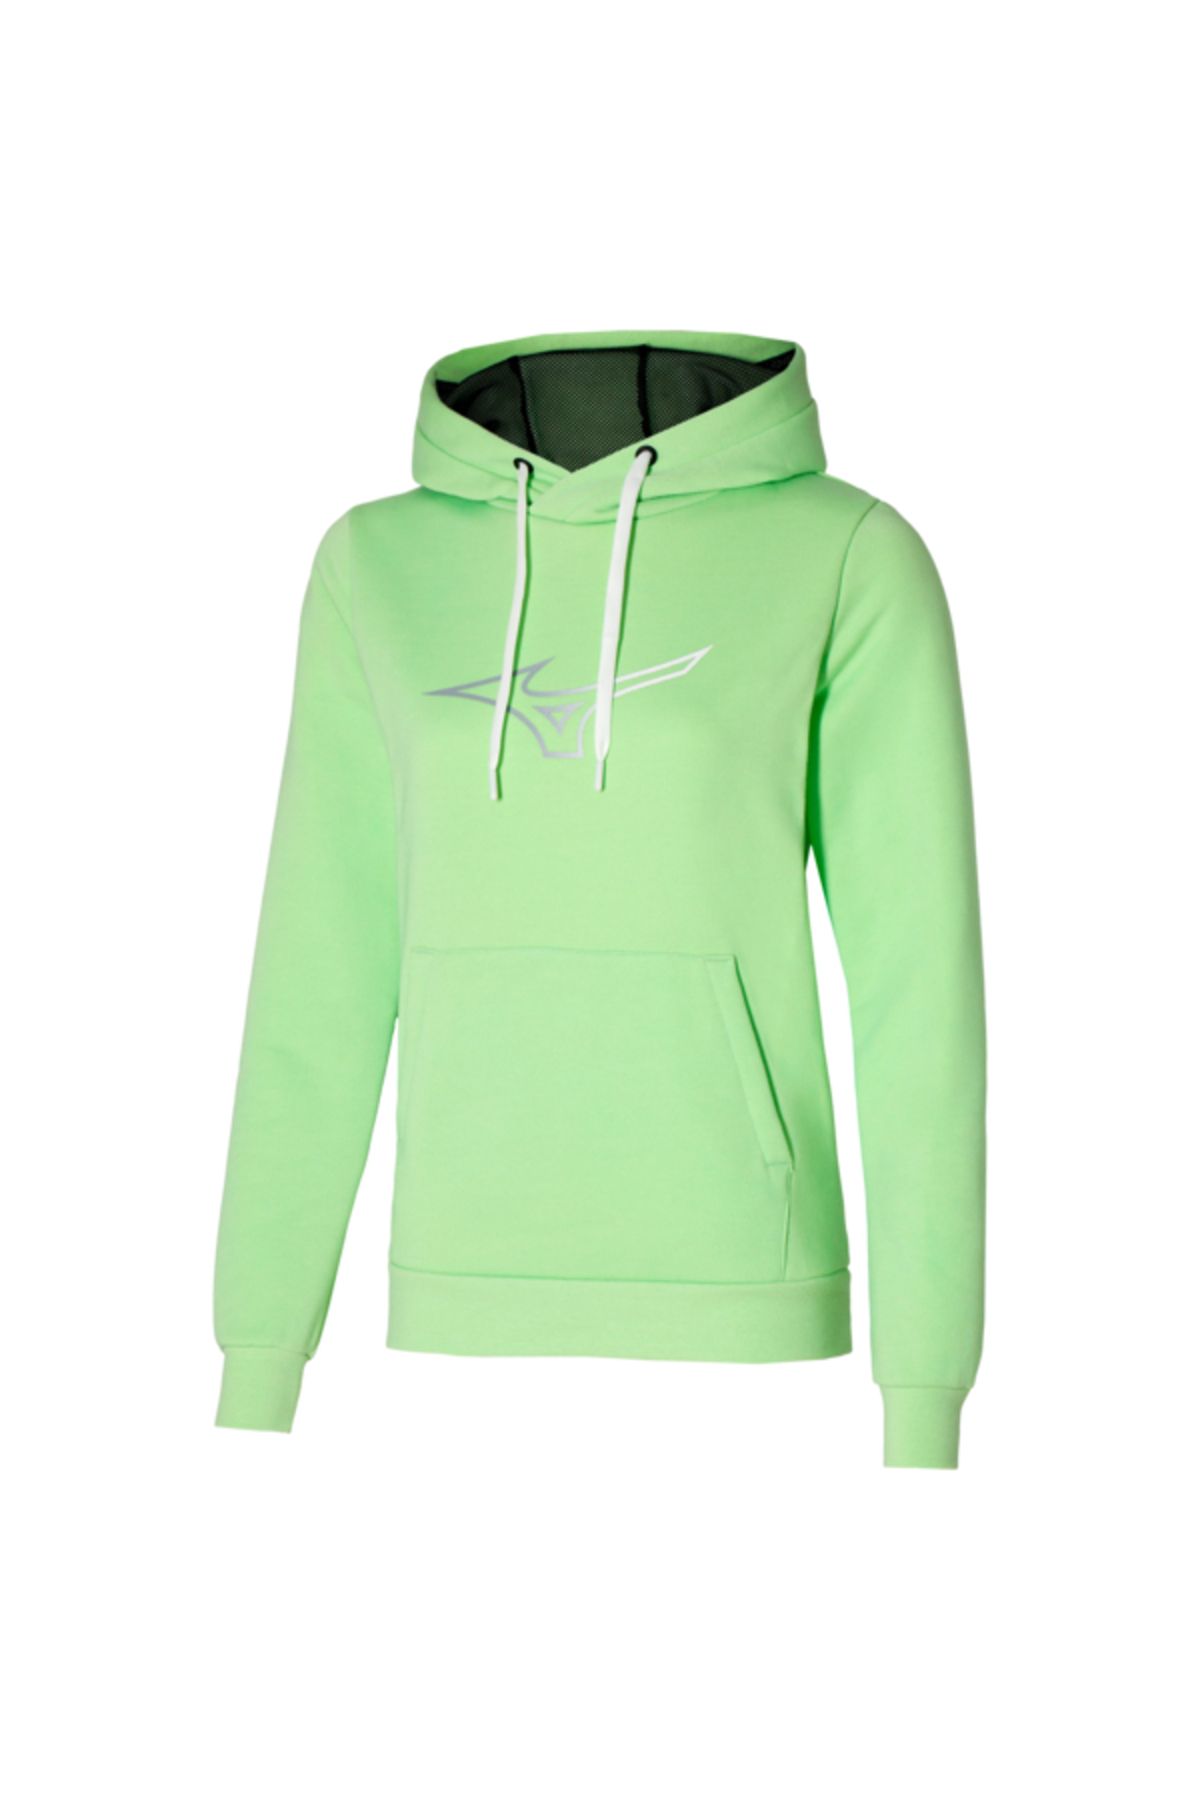 Mizuno Release Hoodie Kadın Kapüşonlu Sweatshirt Yeşil